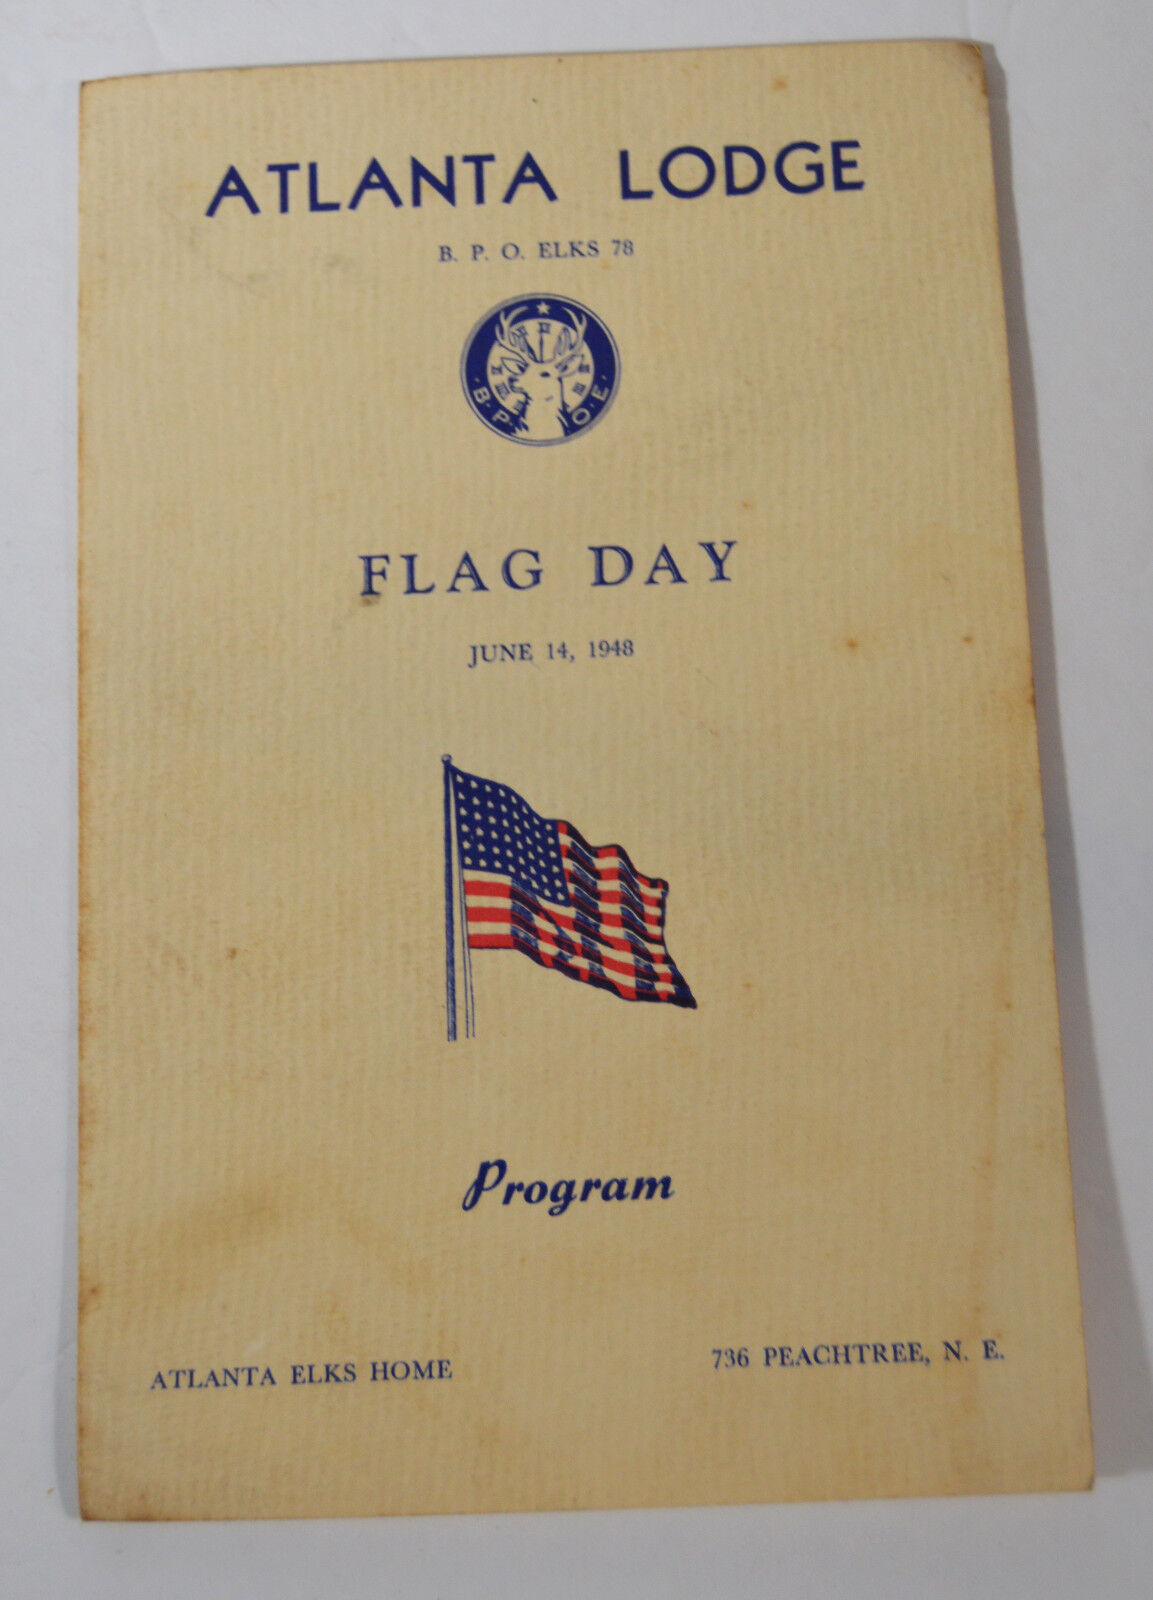 Vintage 1948 Folded Program Atlanta Lodge RPO ELKS 78 Flag Day